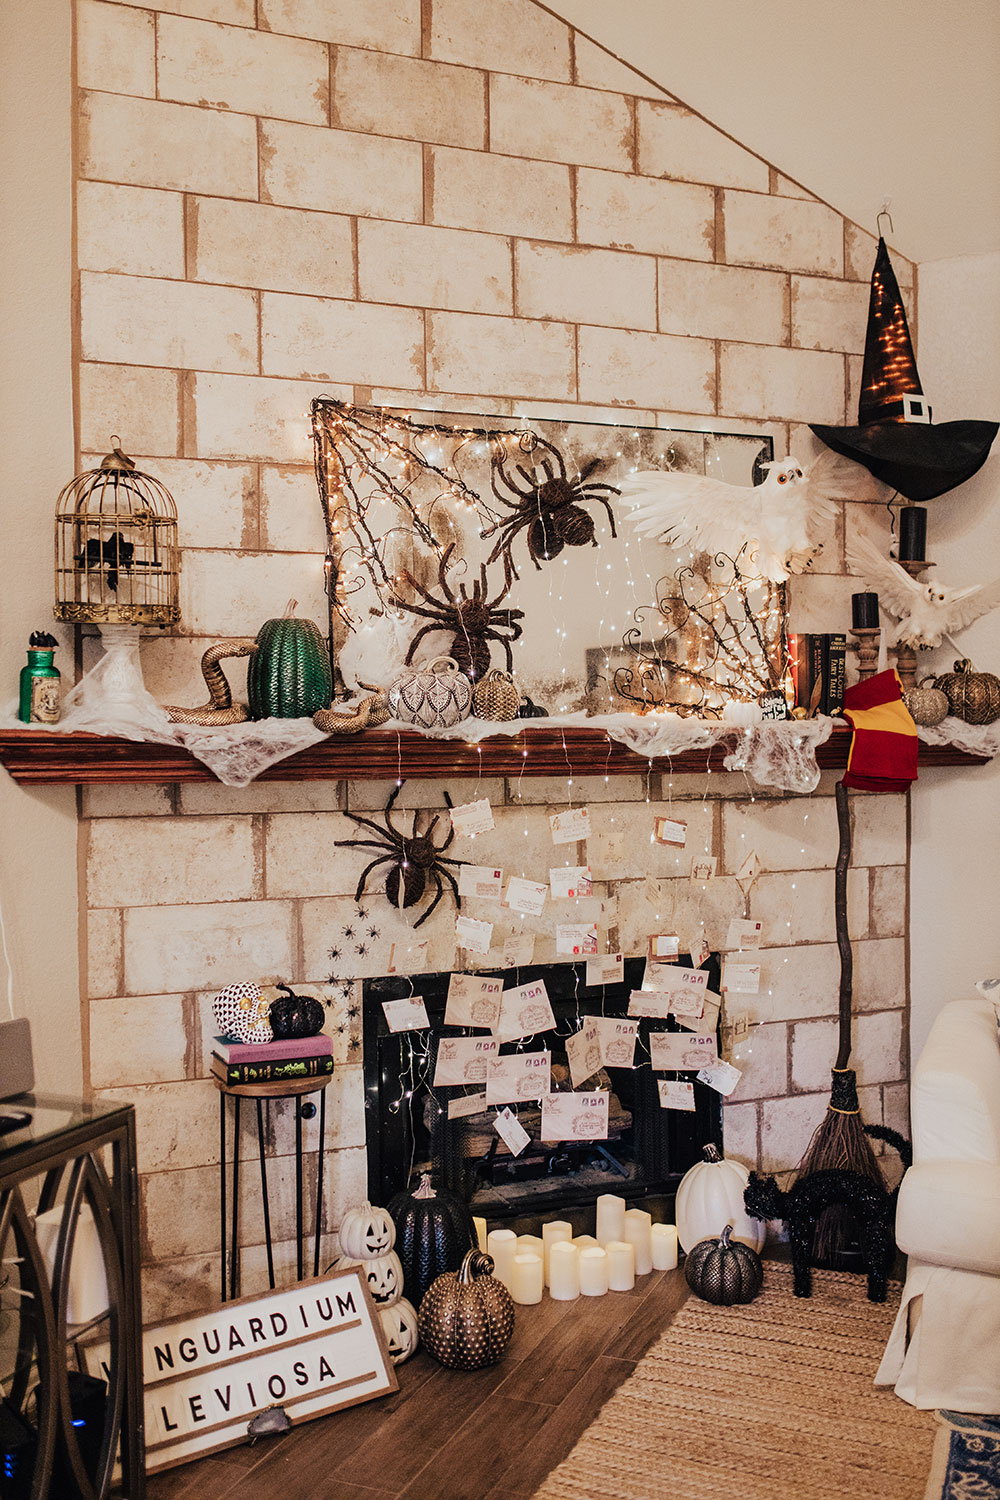 Our Harry Potter Halloween Decorations - Mantle Decor DIY